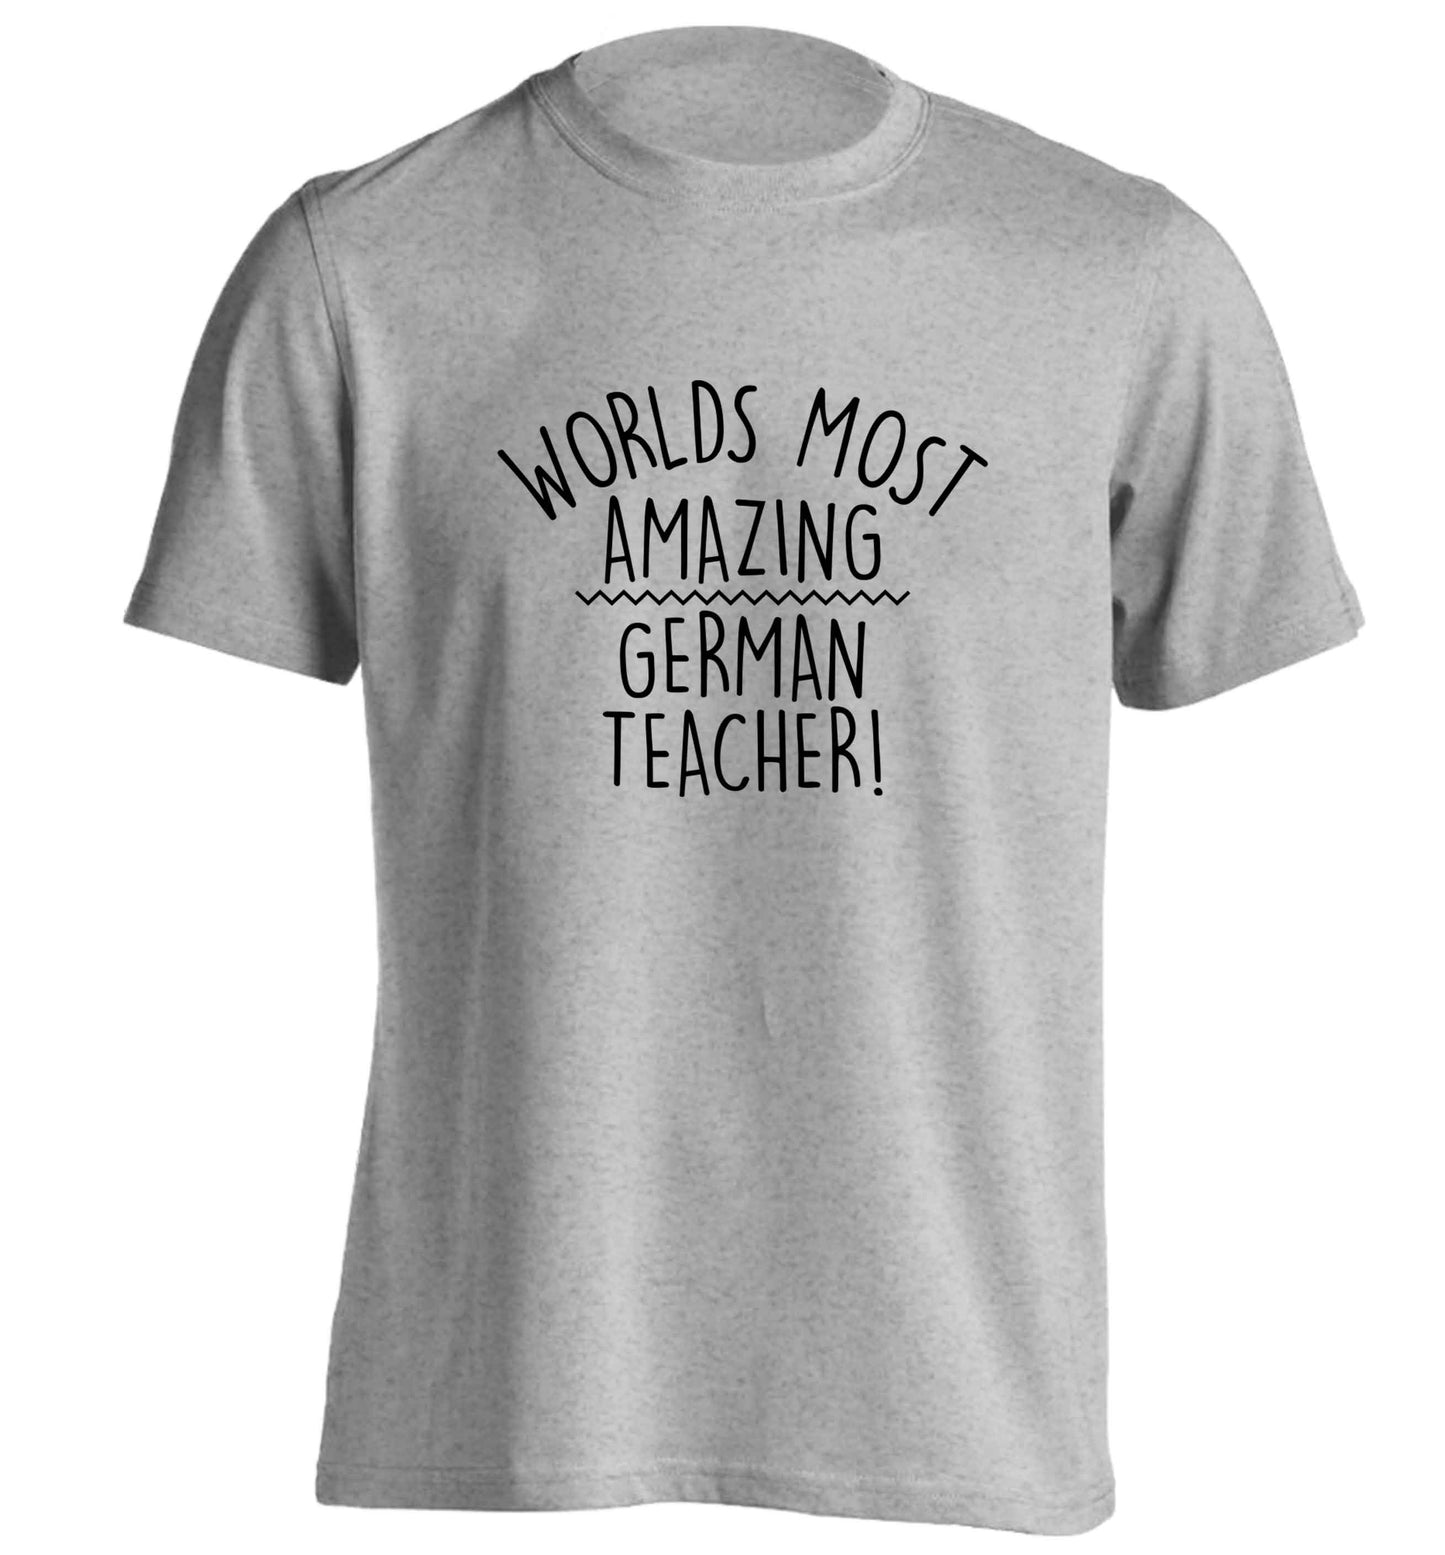 Worlds most amazing German teacher adults unisex grey Tshirt 2XL